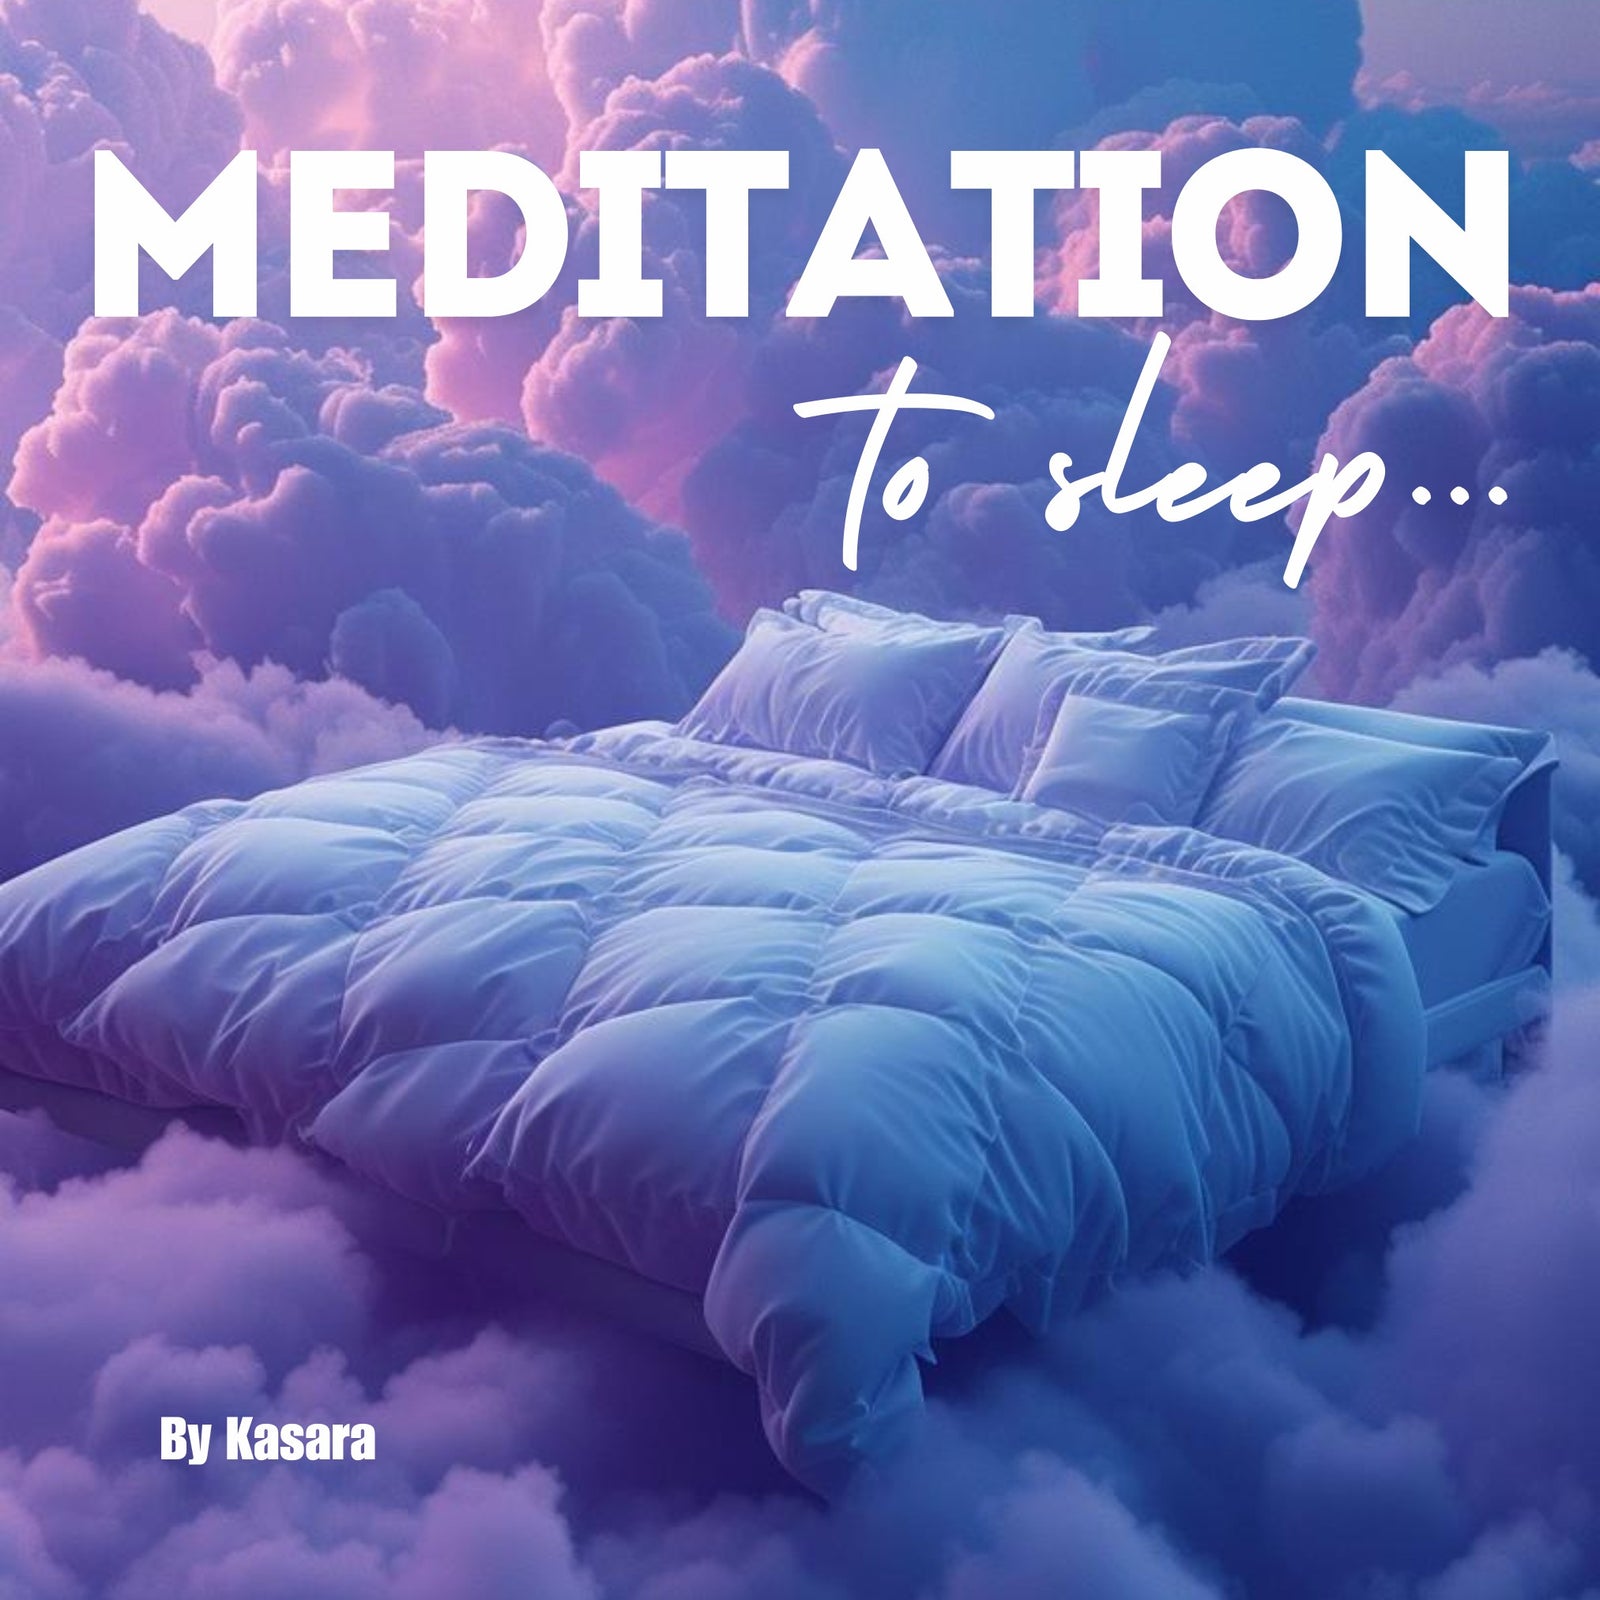 Guided meditation for sleep